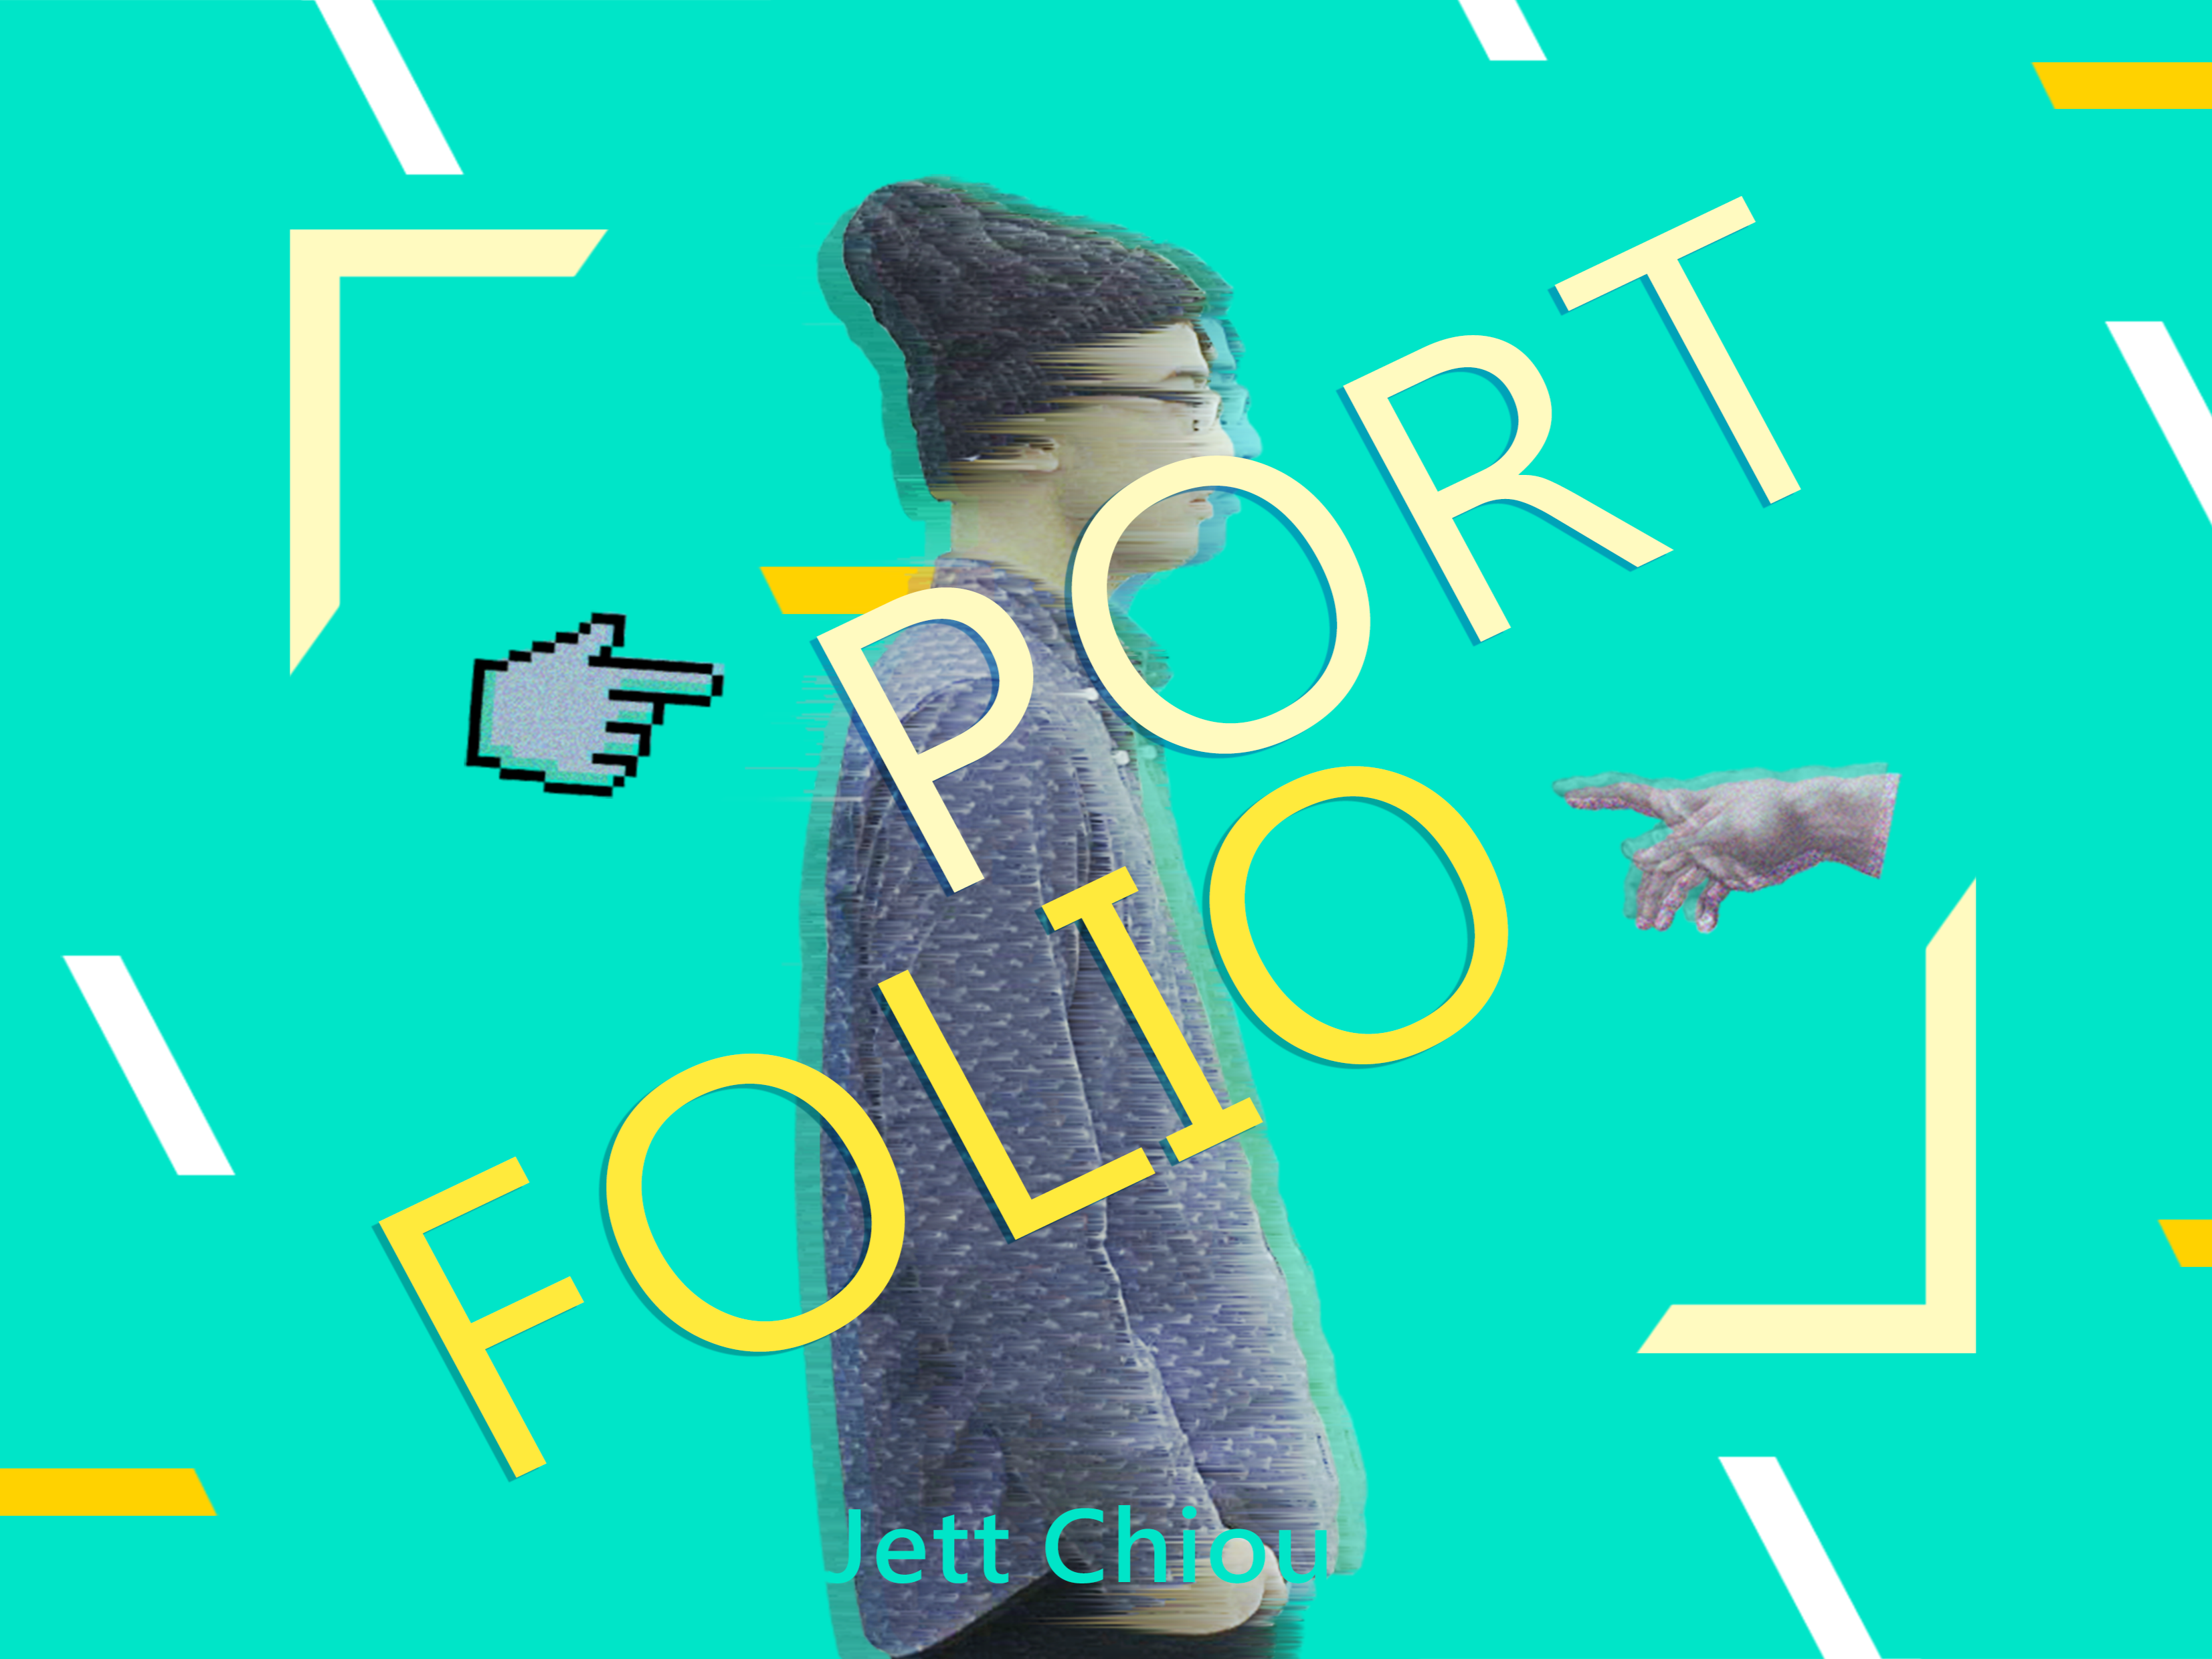 Cover of the portfolio.